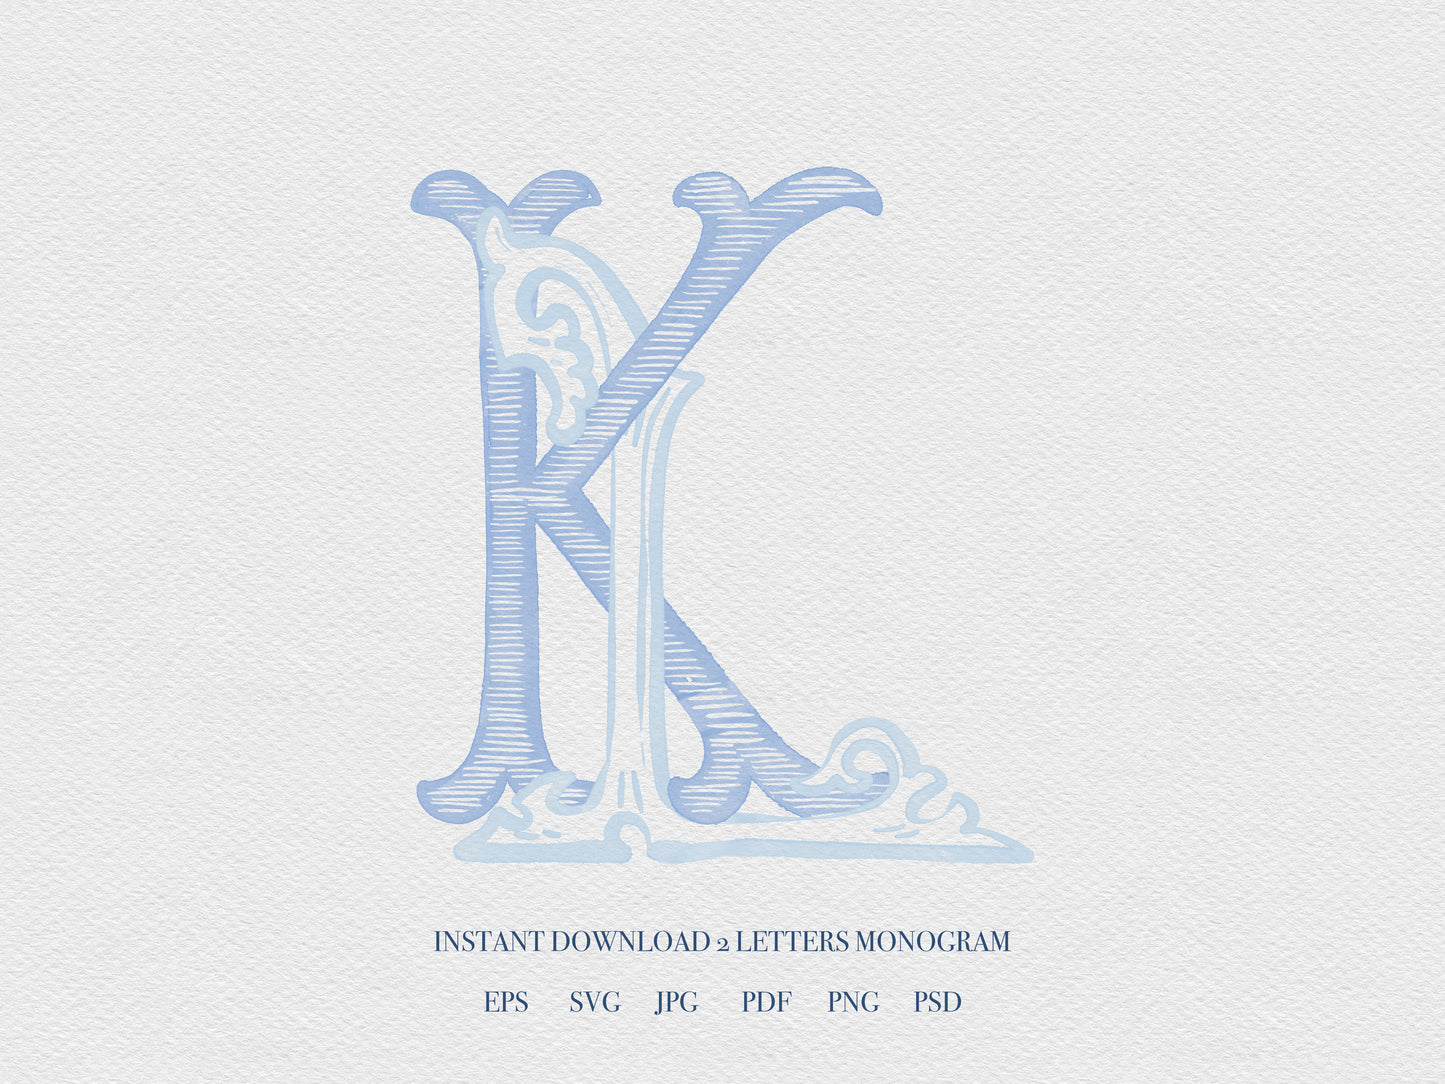 2 Letter Monogram with Letters KL LK | Digital Download - Wedding Monogram SVG, Personal Logo, Wedding Logo for Wedding Invitations The Wedding Crest Lab